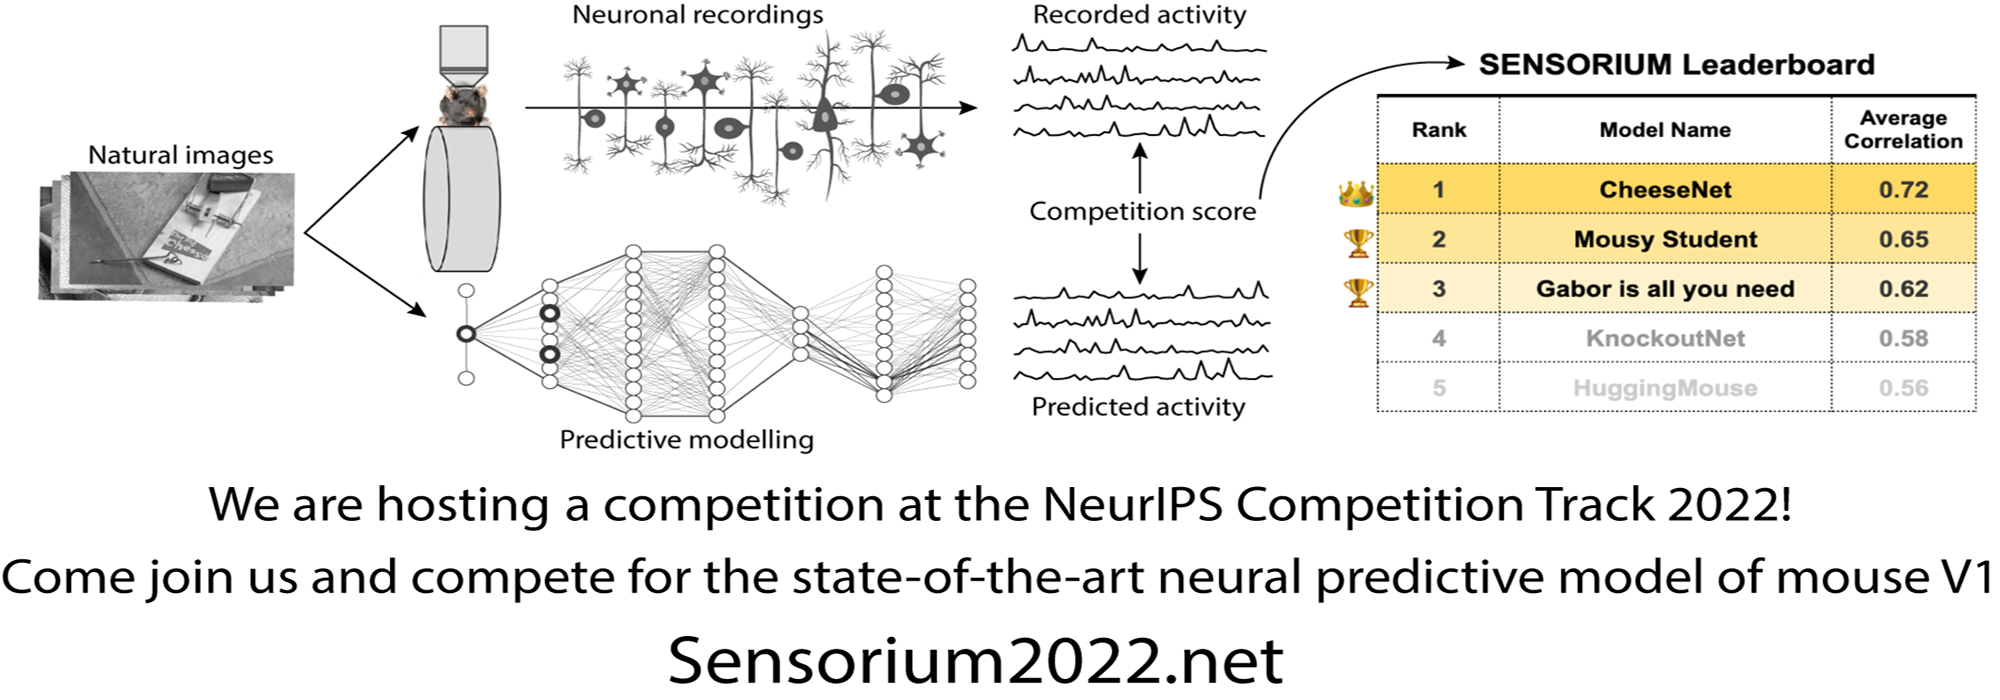 Sensorium 2022 prediction challenge at NeurIPS